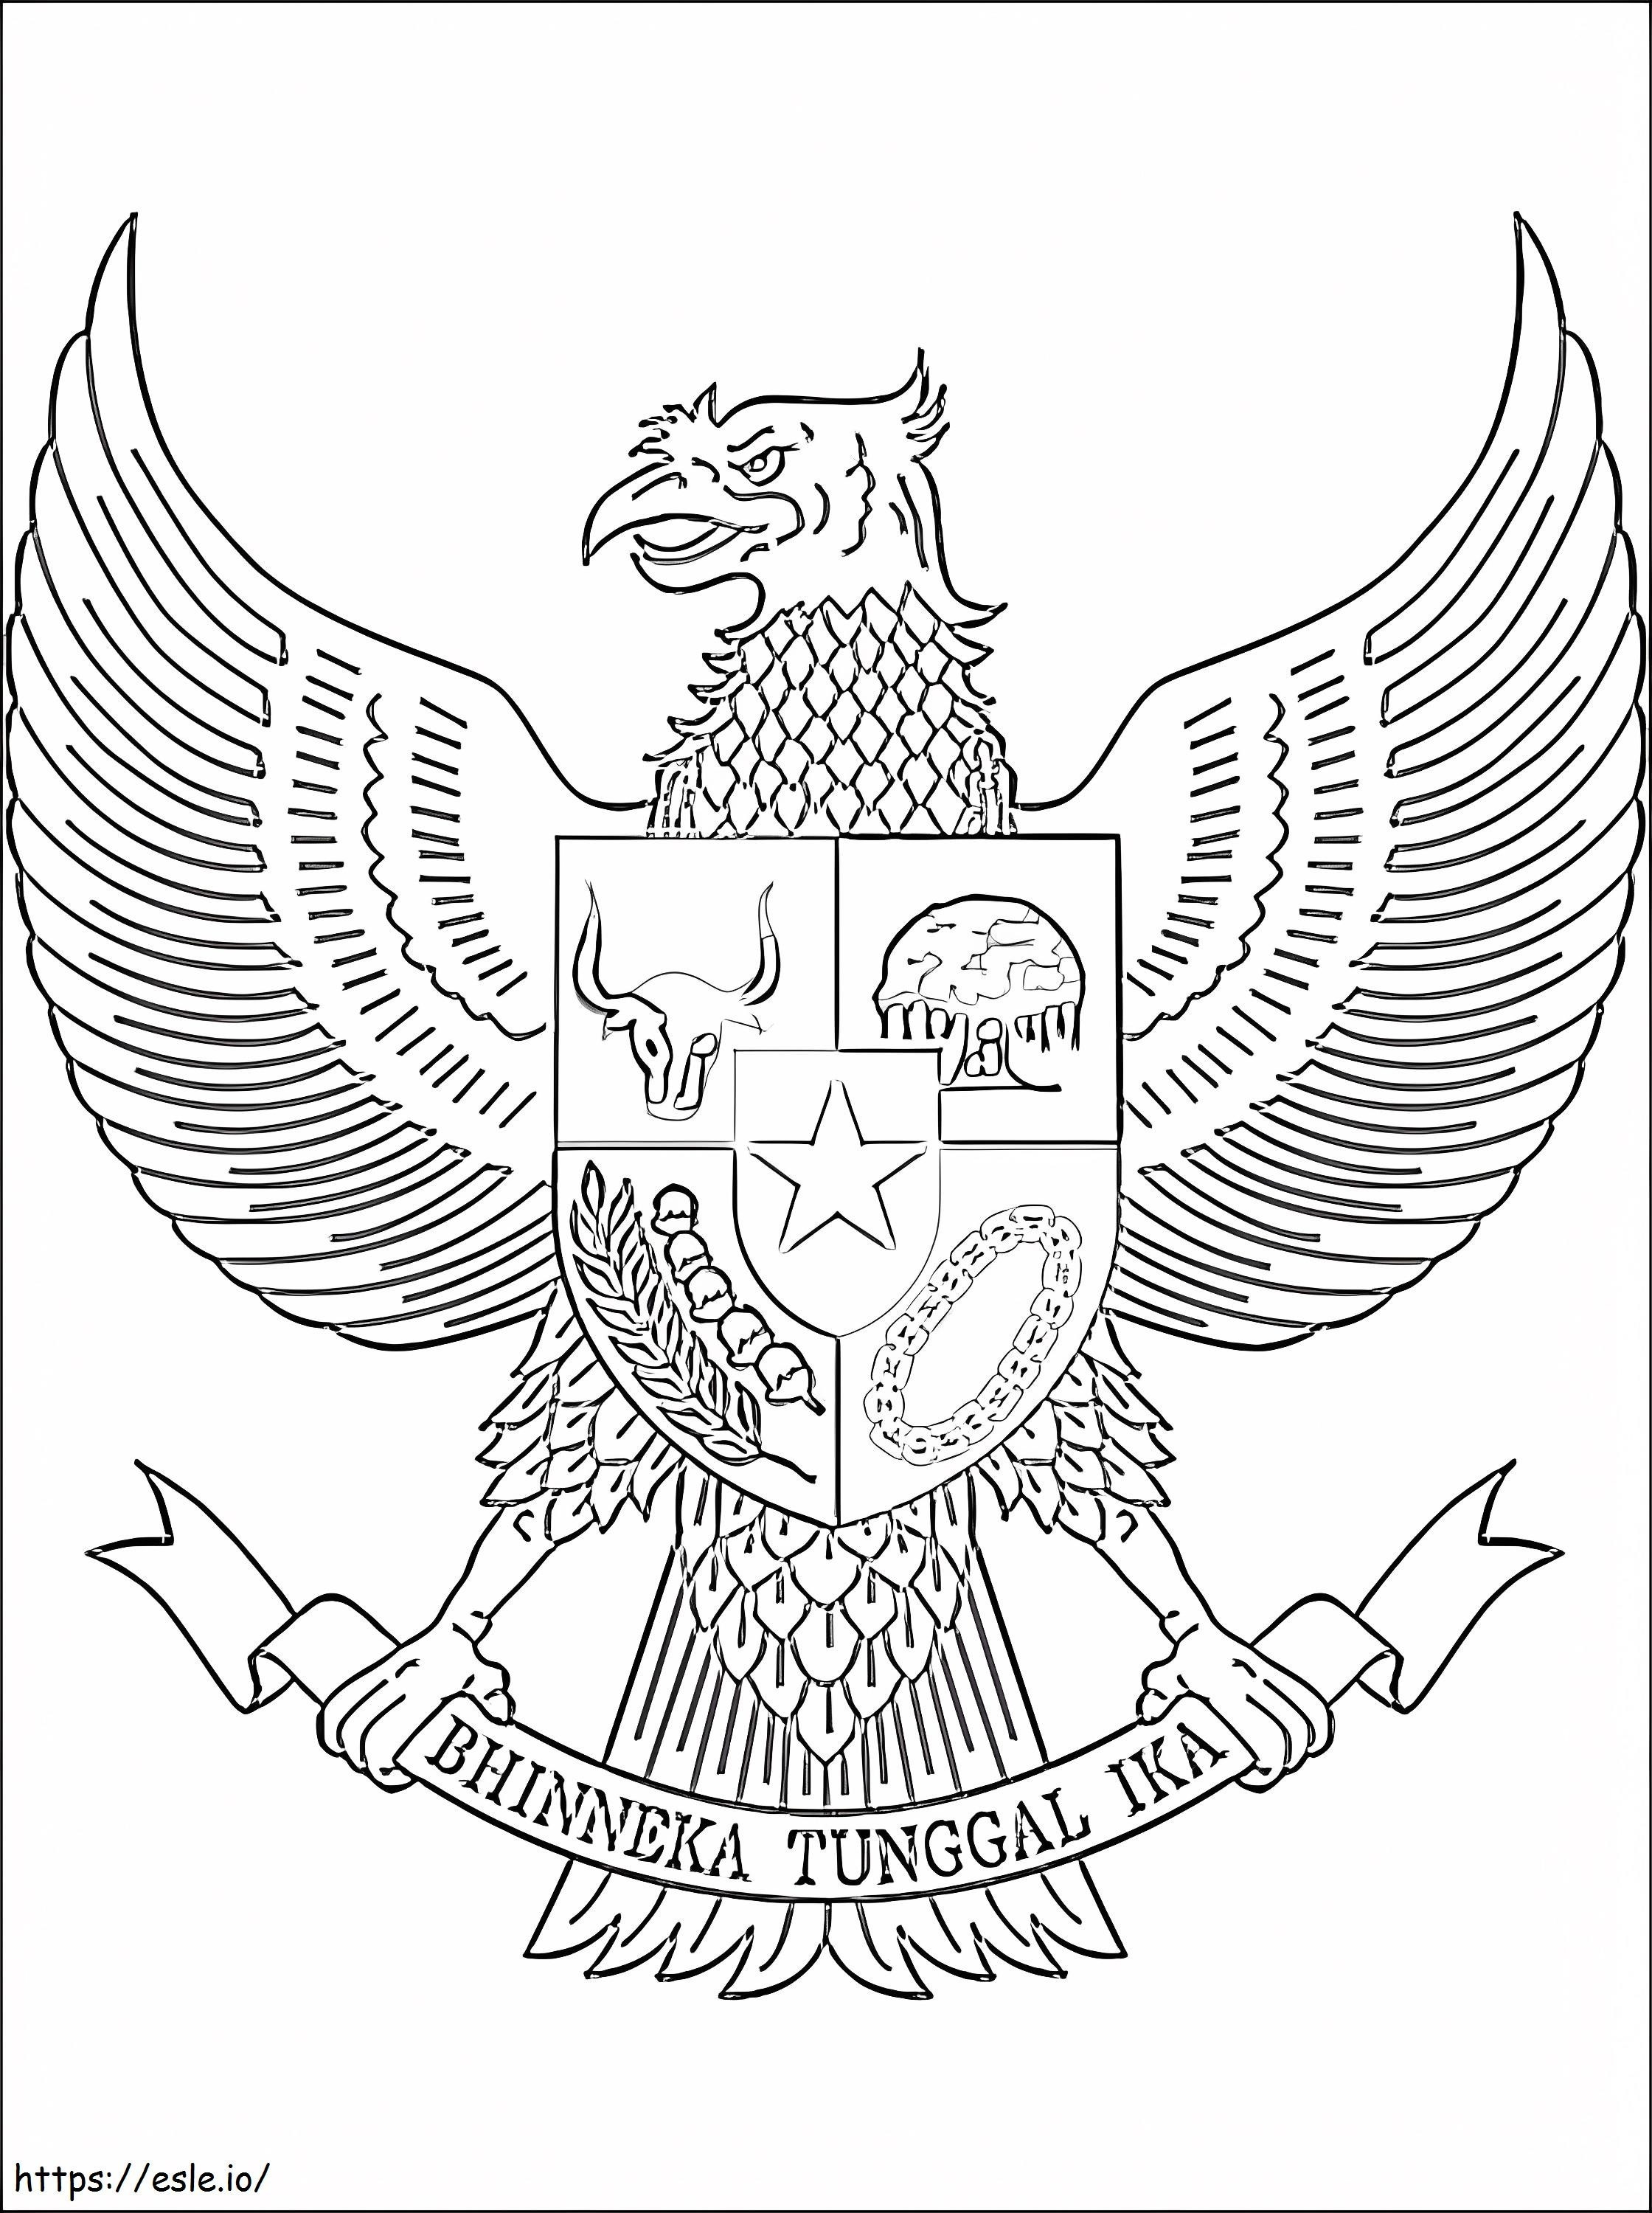 Indonézia nemzeti jelképe kifestő